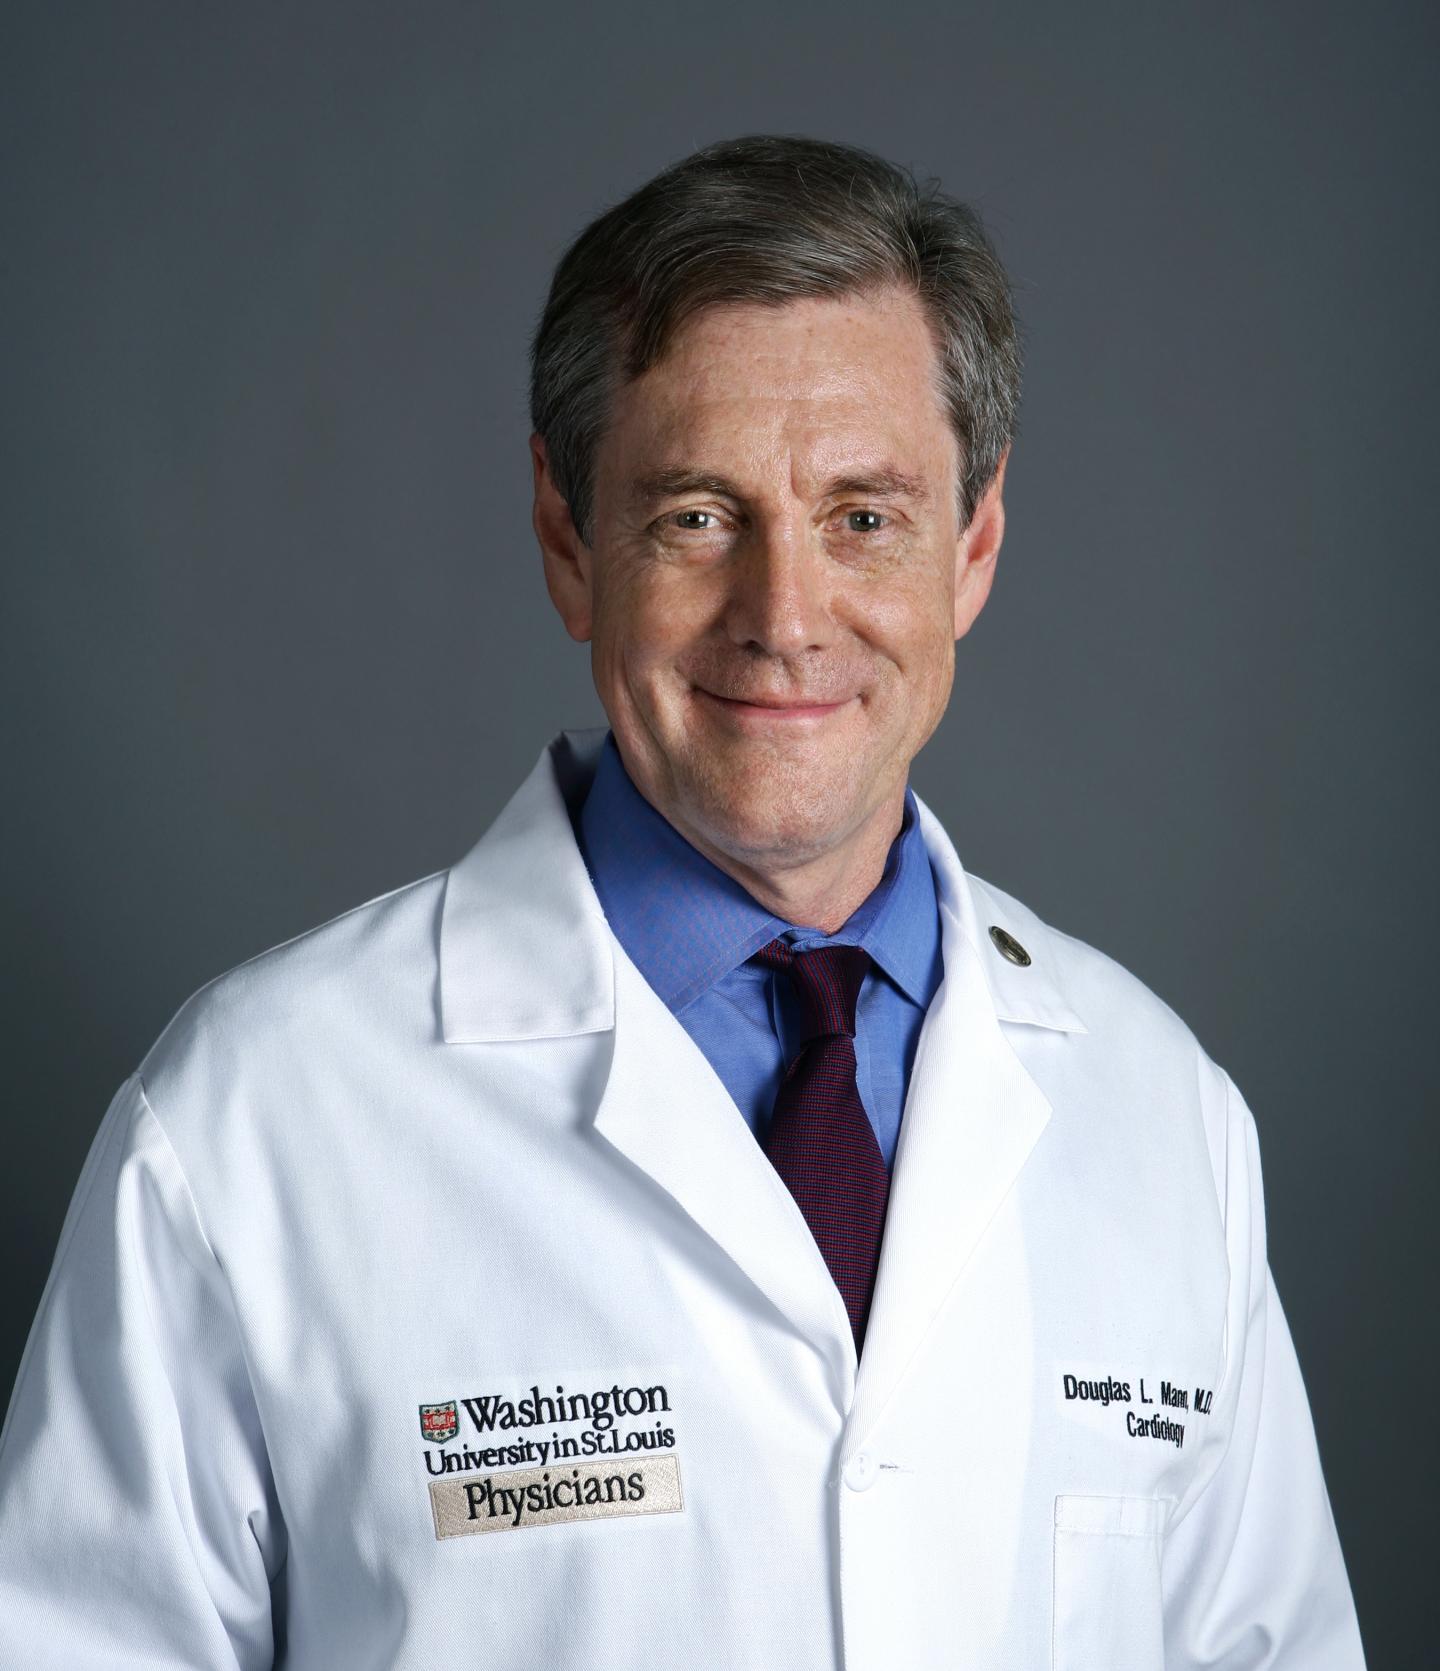 Douglas L. Mann, American College of Cardiology